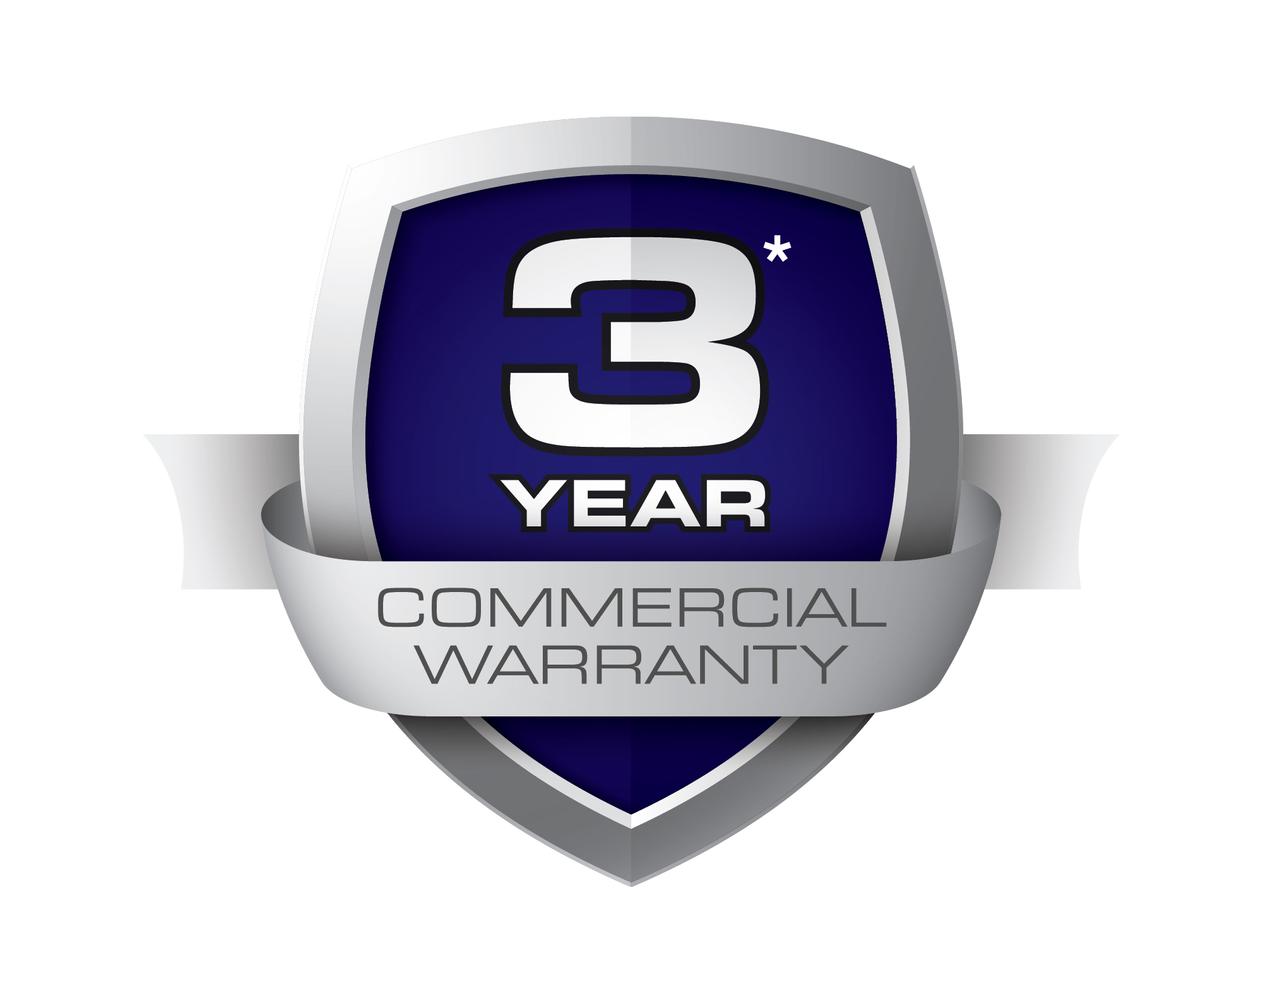 3 Year Commercial Warranty